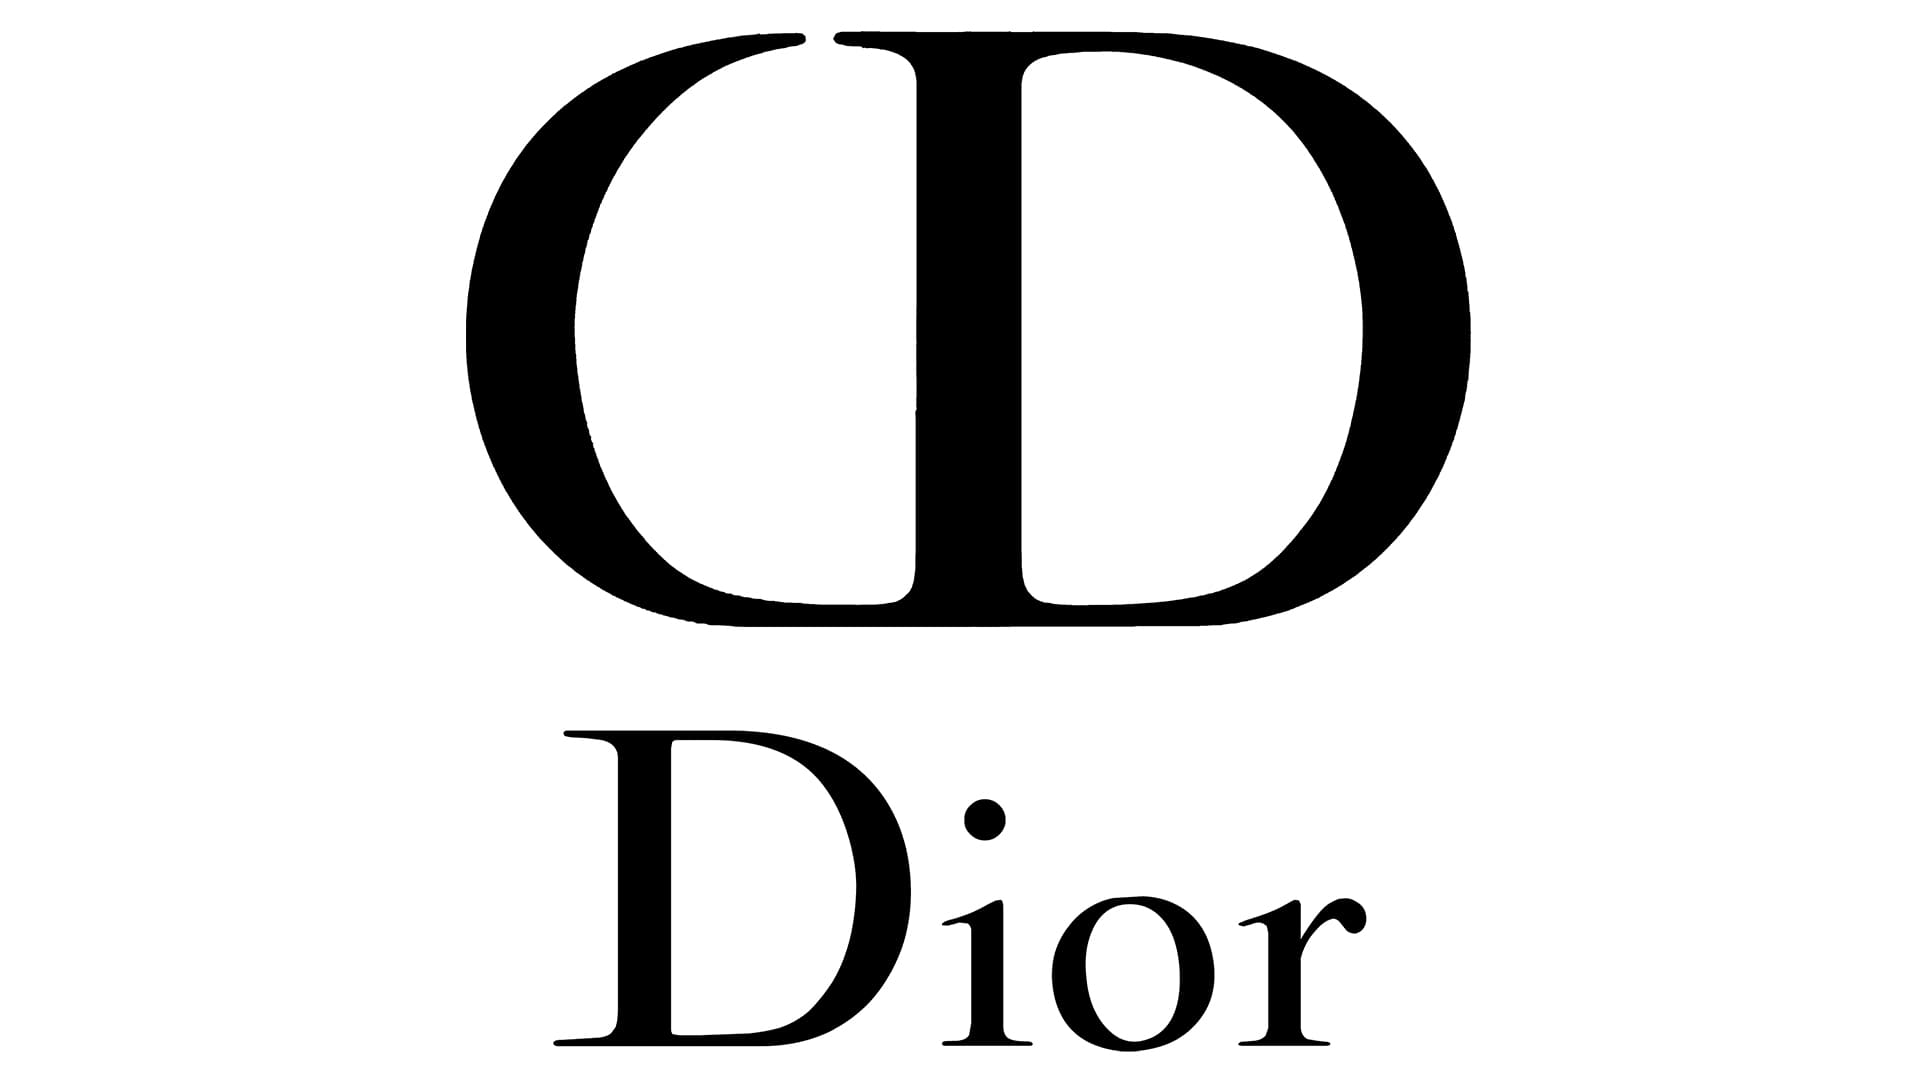 Chi tiết 86+ về marque dior logo - Giày nam đẹp